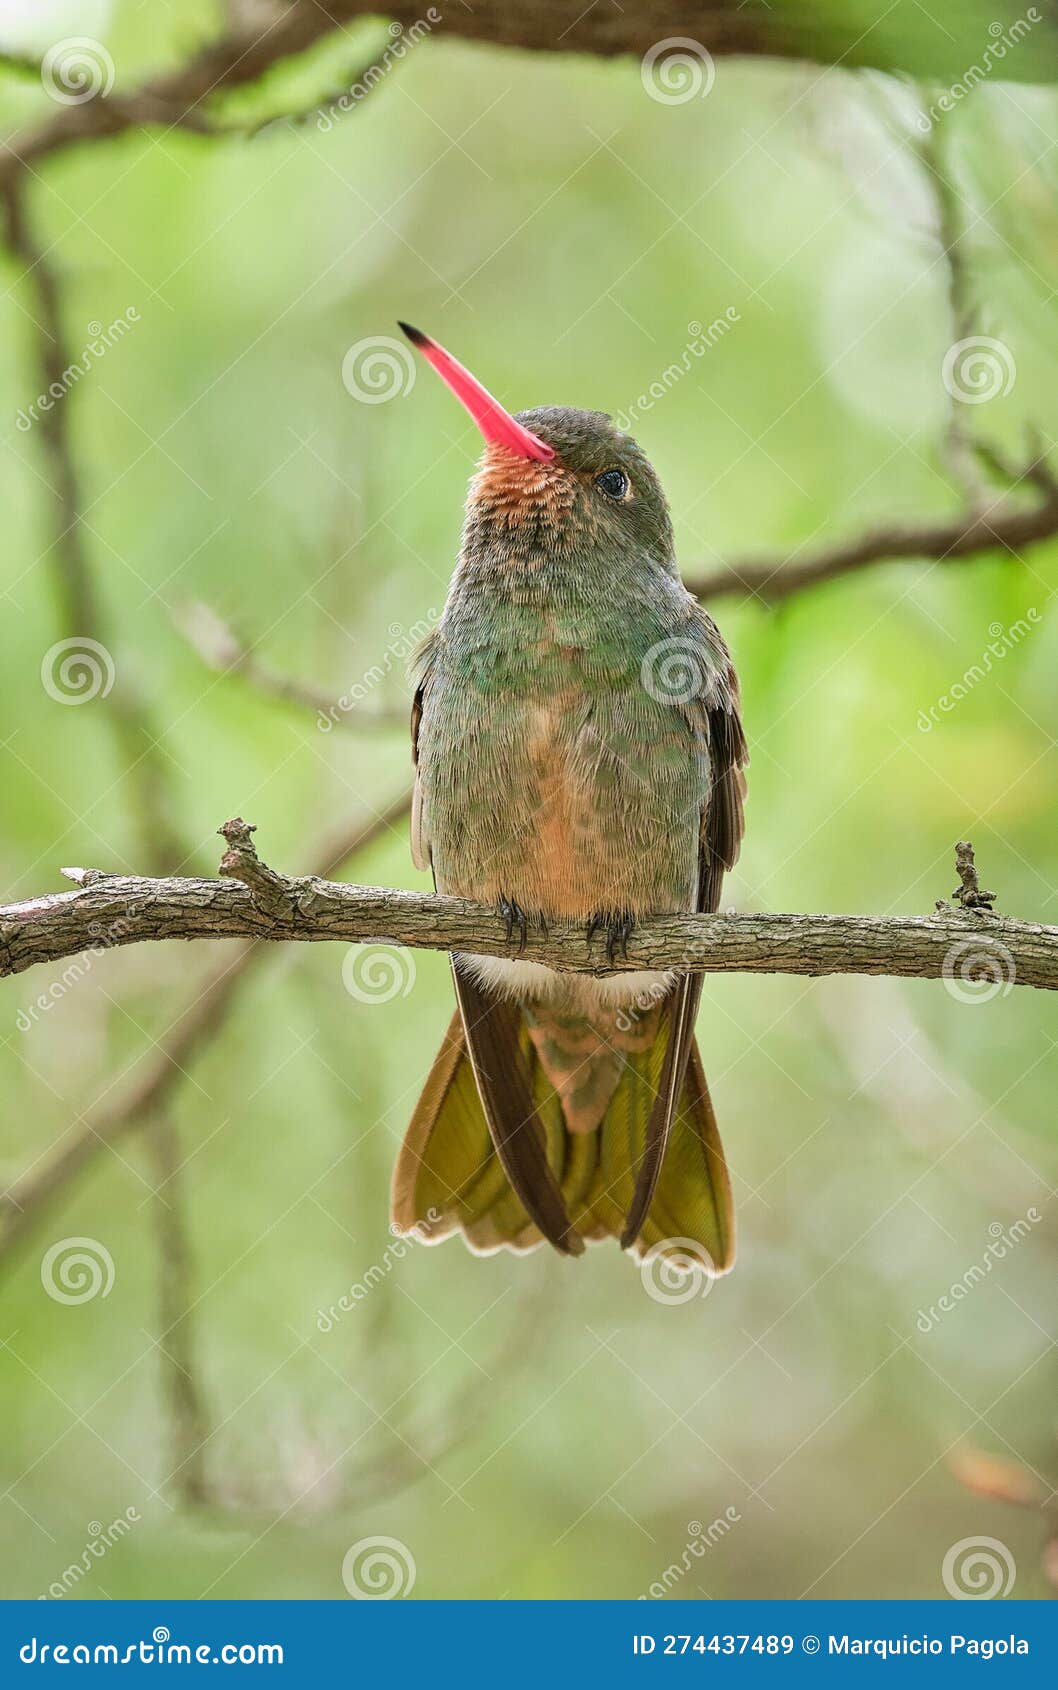 small hummingbird resting on a thin tree branch.